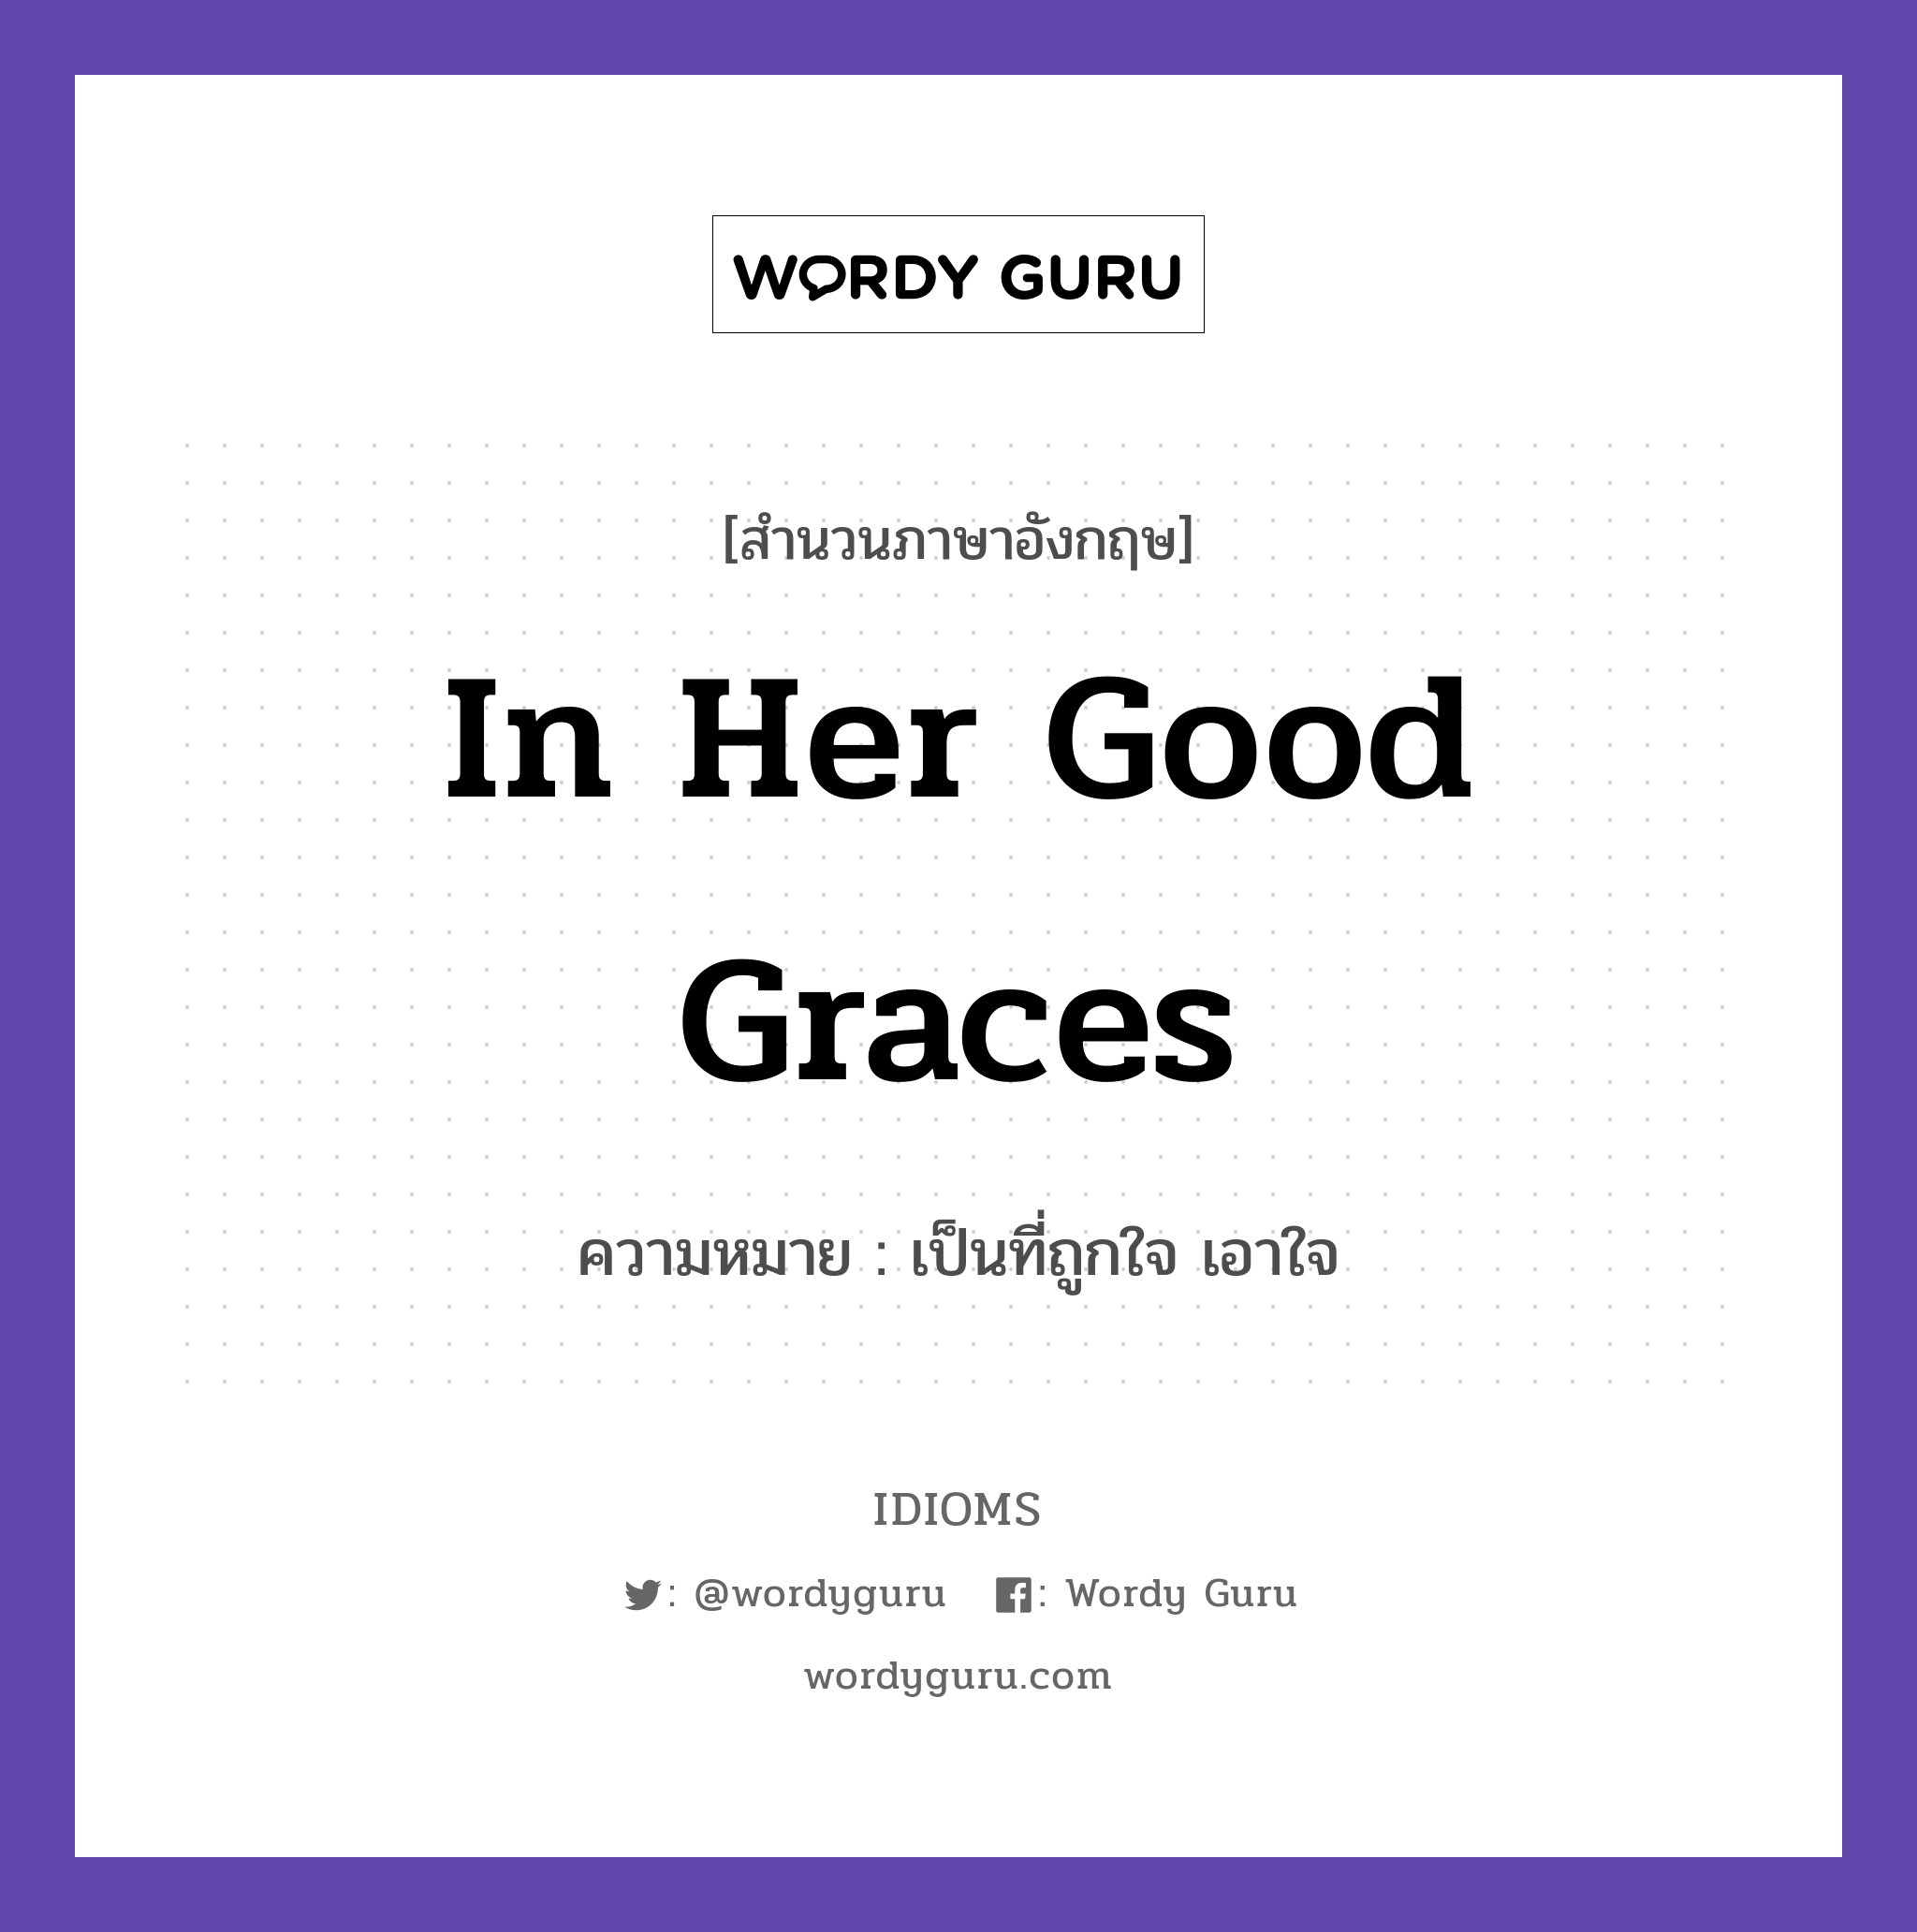 In her good graces แปลว่า?, สำนวนภาษาอังกฤษ In her good graces ความหมาย เป็นที่ถูกใจ เอาใจ